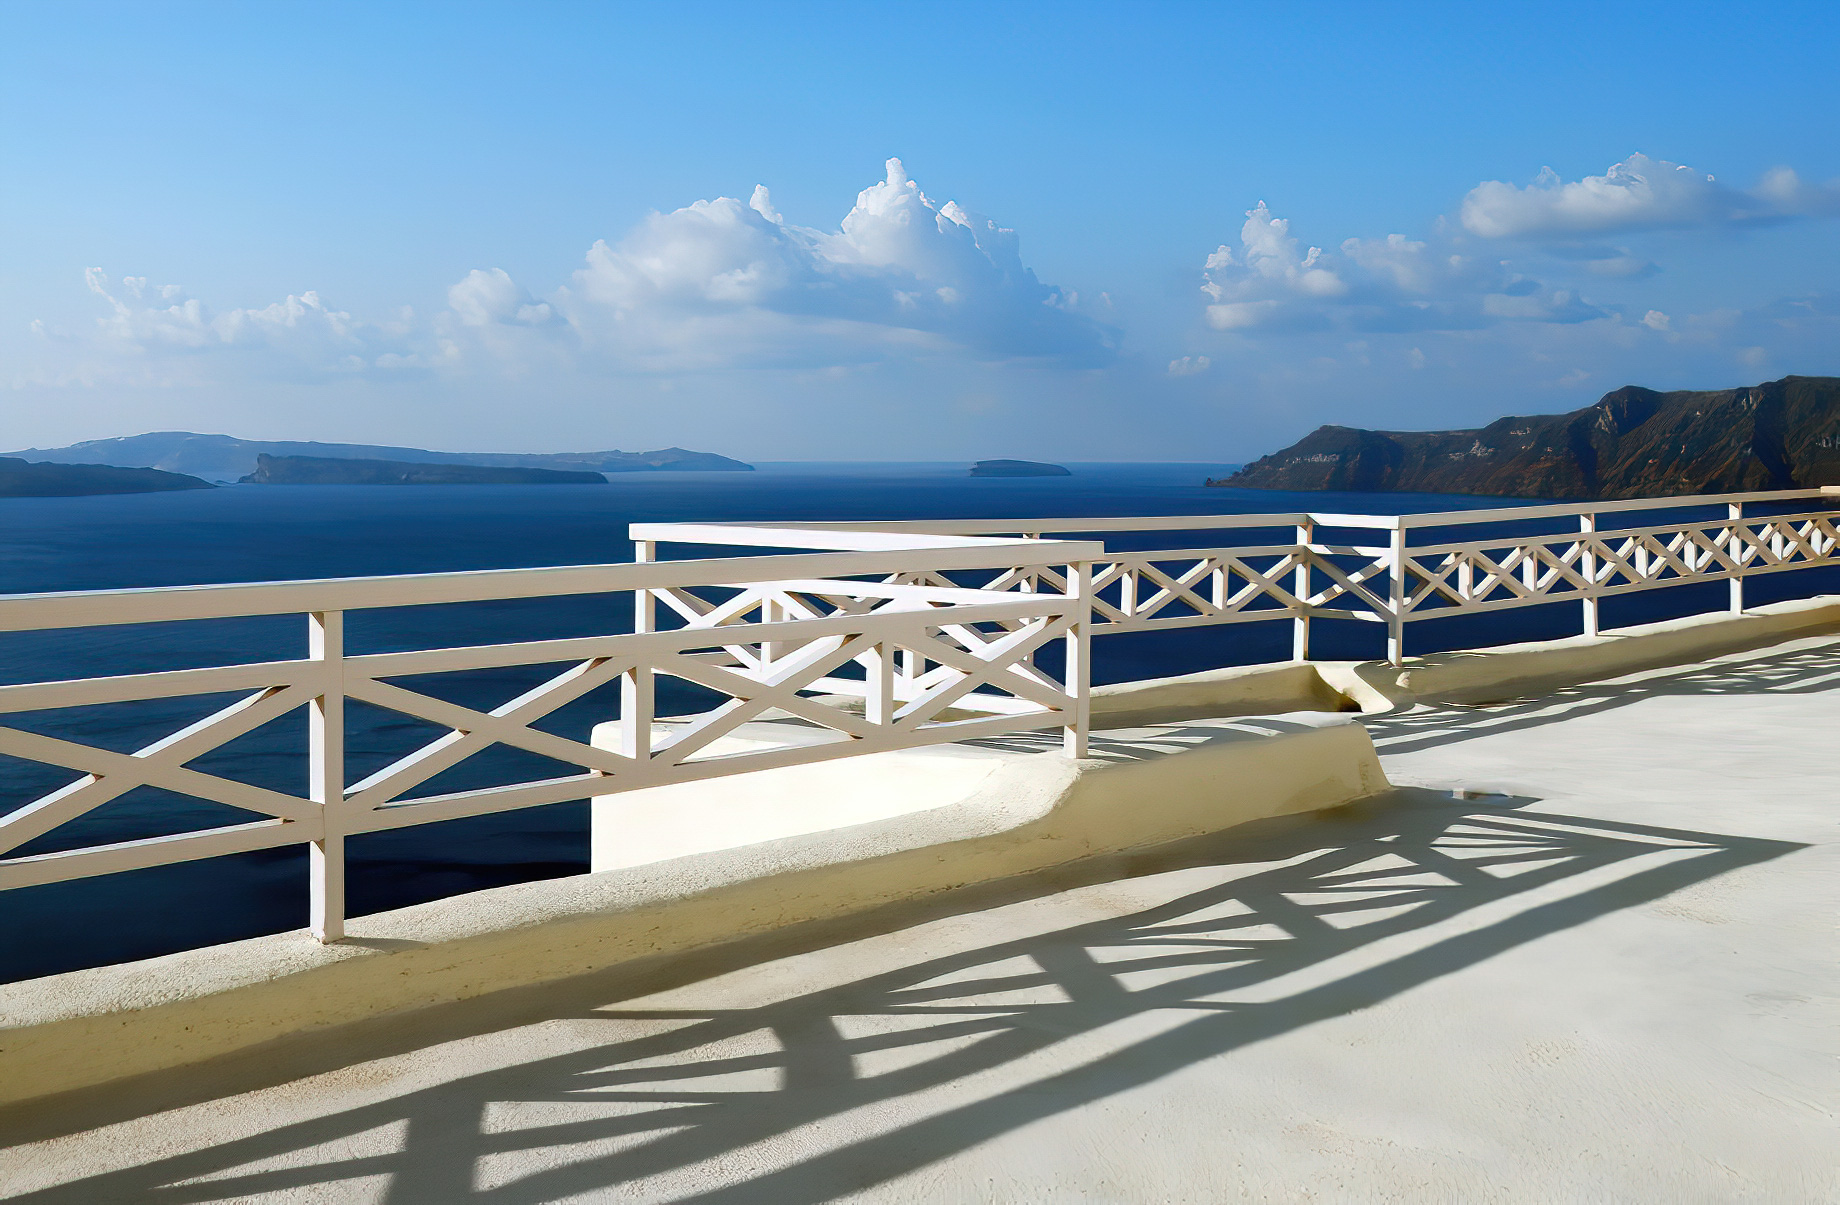 Mystique Hotel Santorini – Oia, Santorini Island, Greece – Exterior Deck Railing